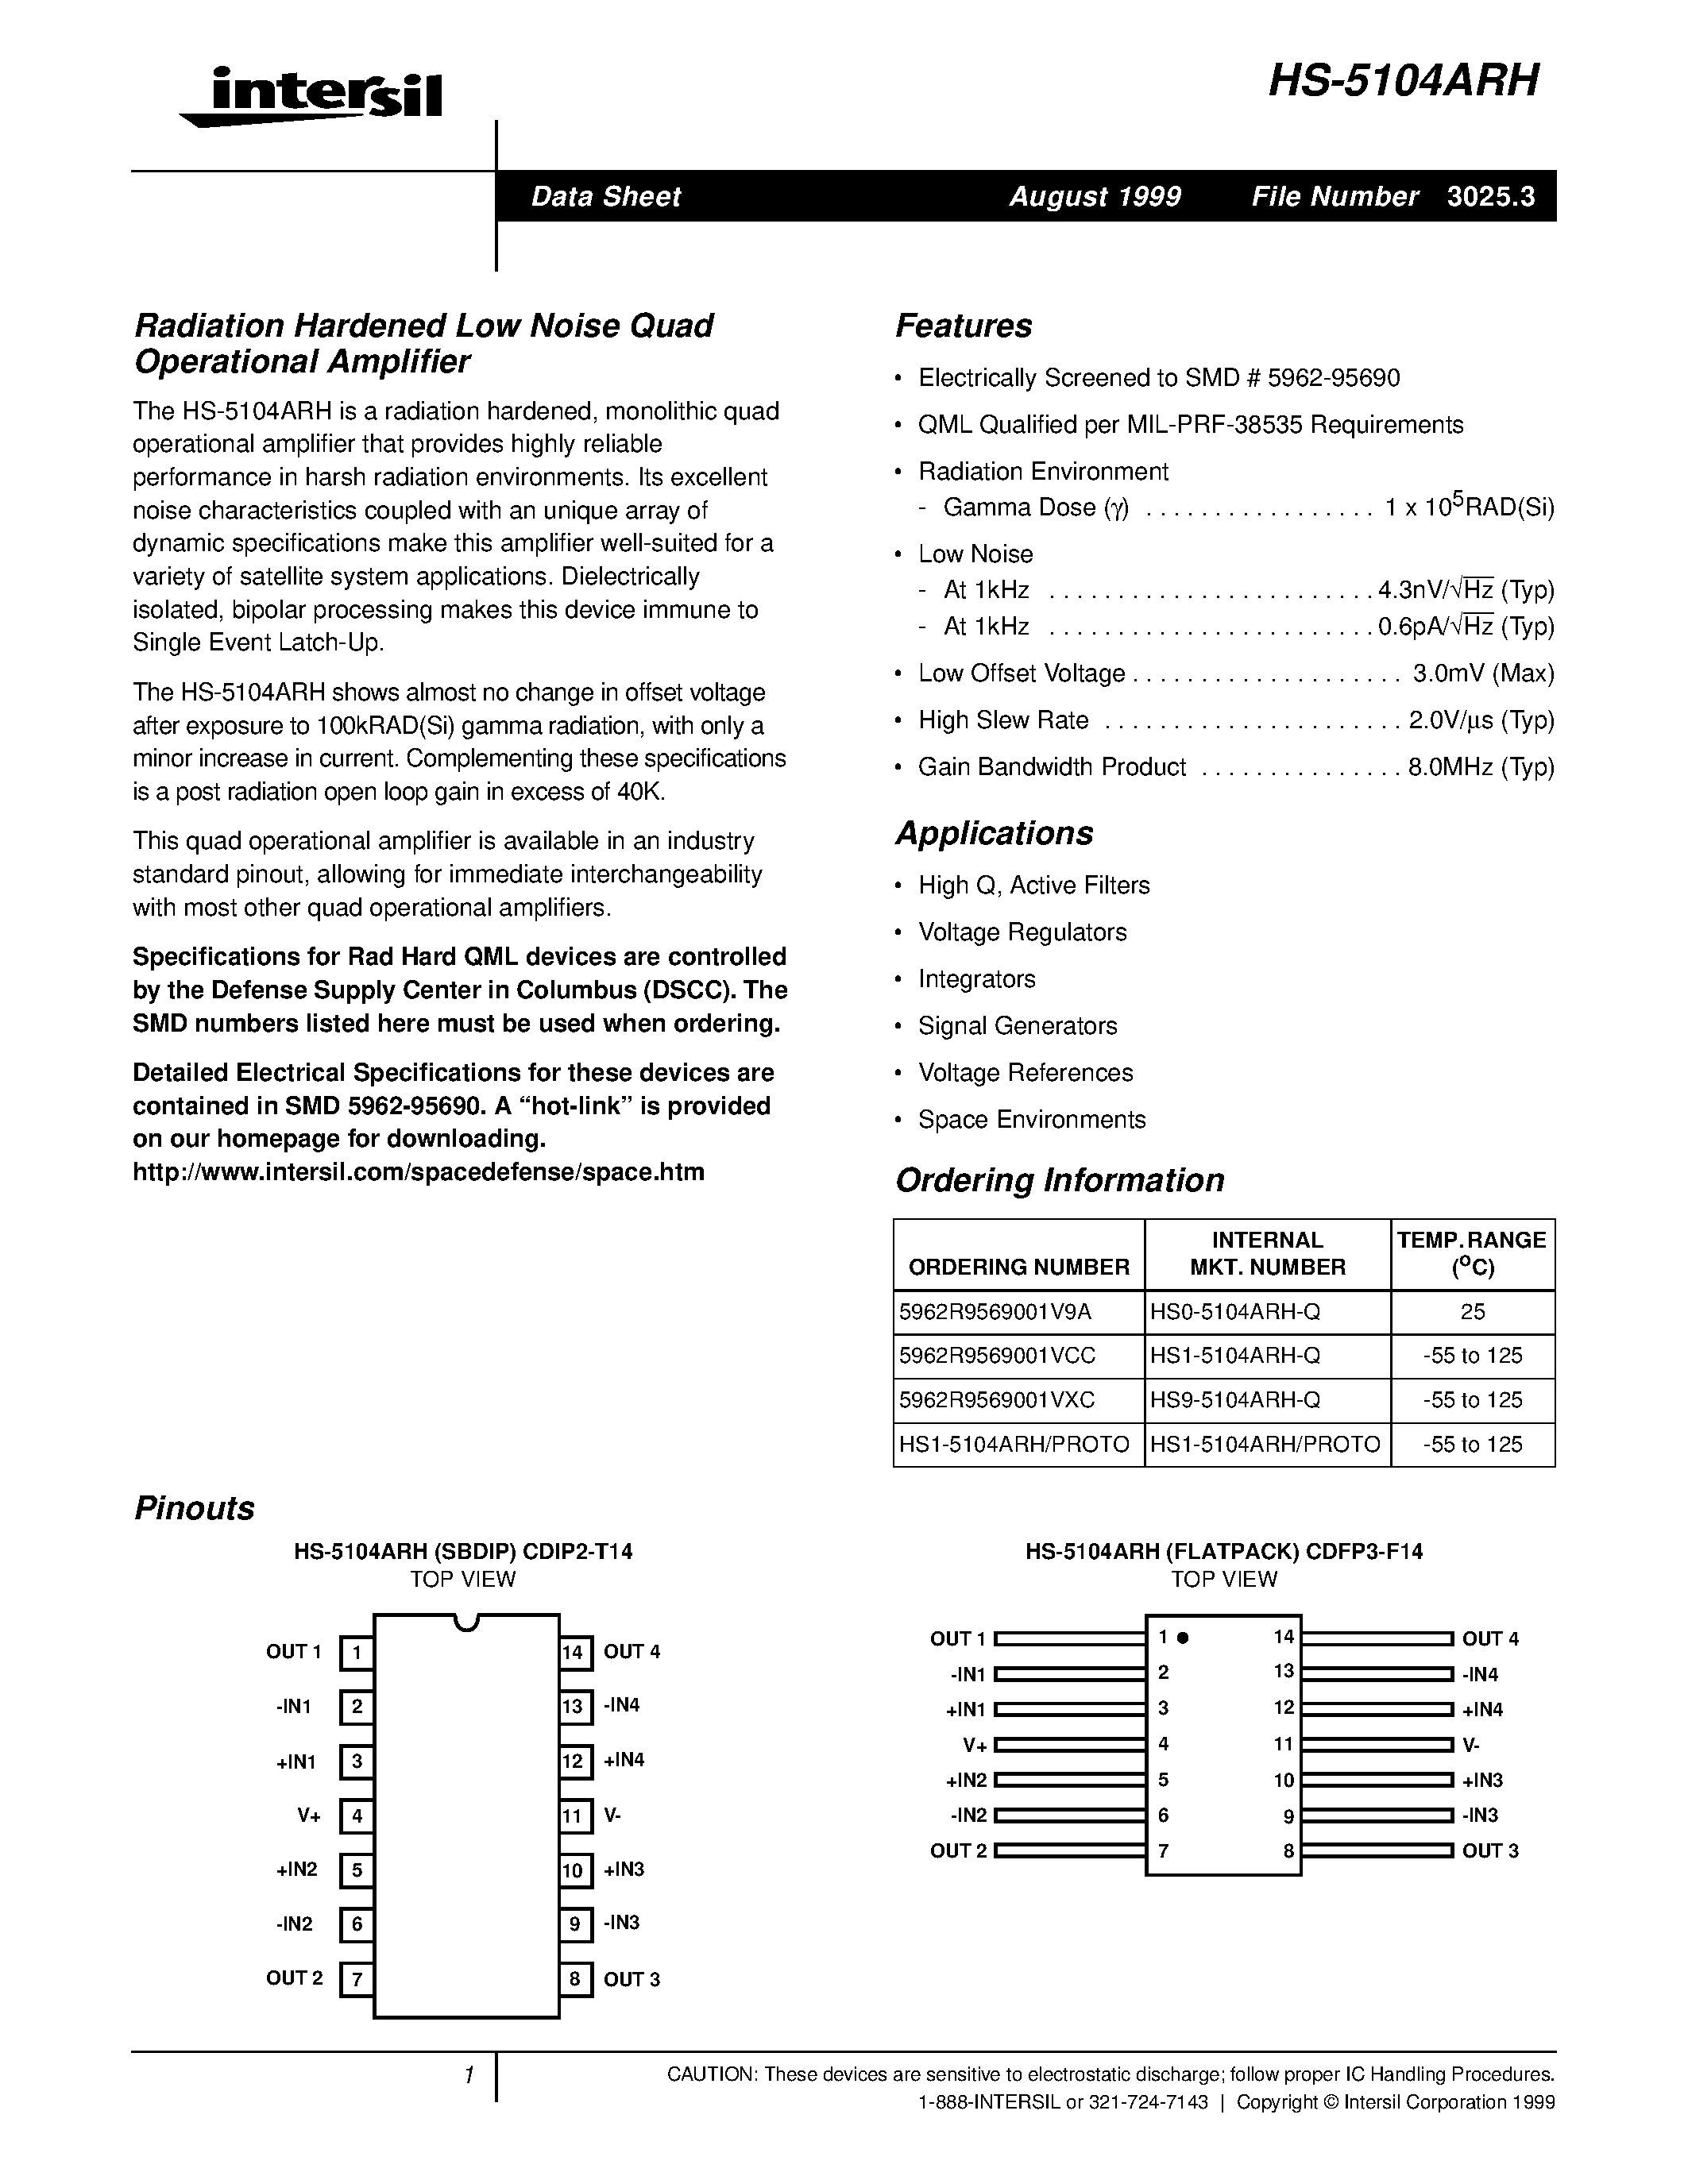 Даташит HS0-5104ARH-Q-Radiation Hardened Low Noise Quad Operational Amplifier страница 1